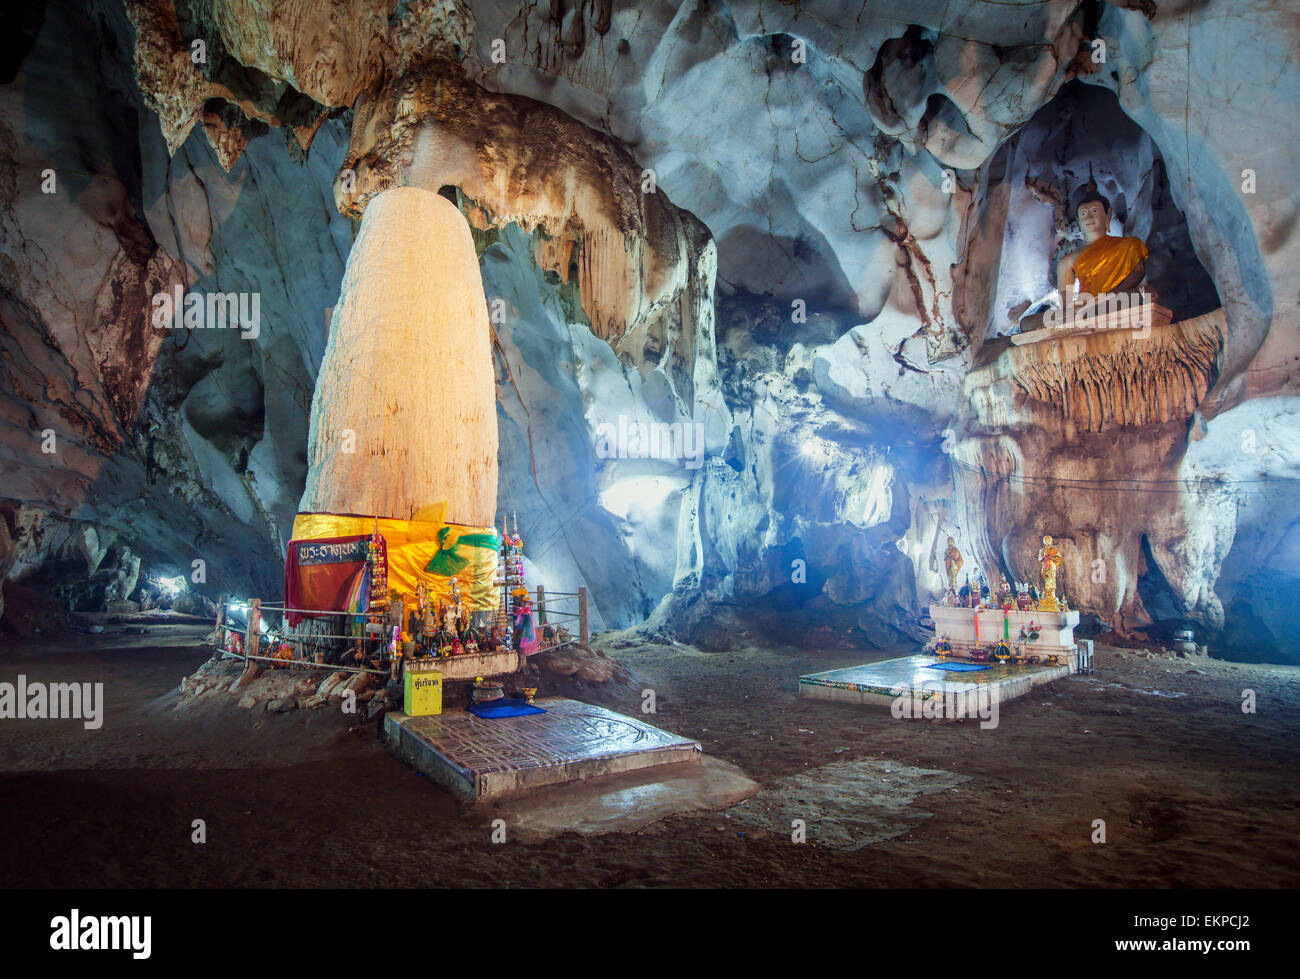 Meung sulla grotta, Chiang Mai, Thailandia Foto Stock